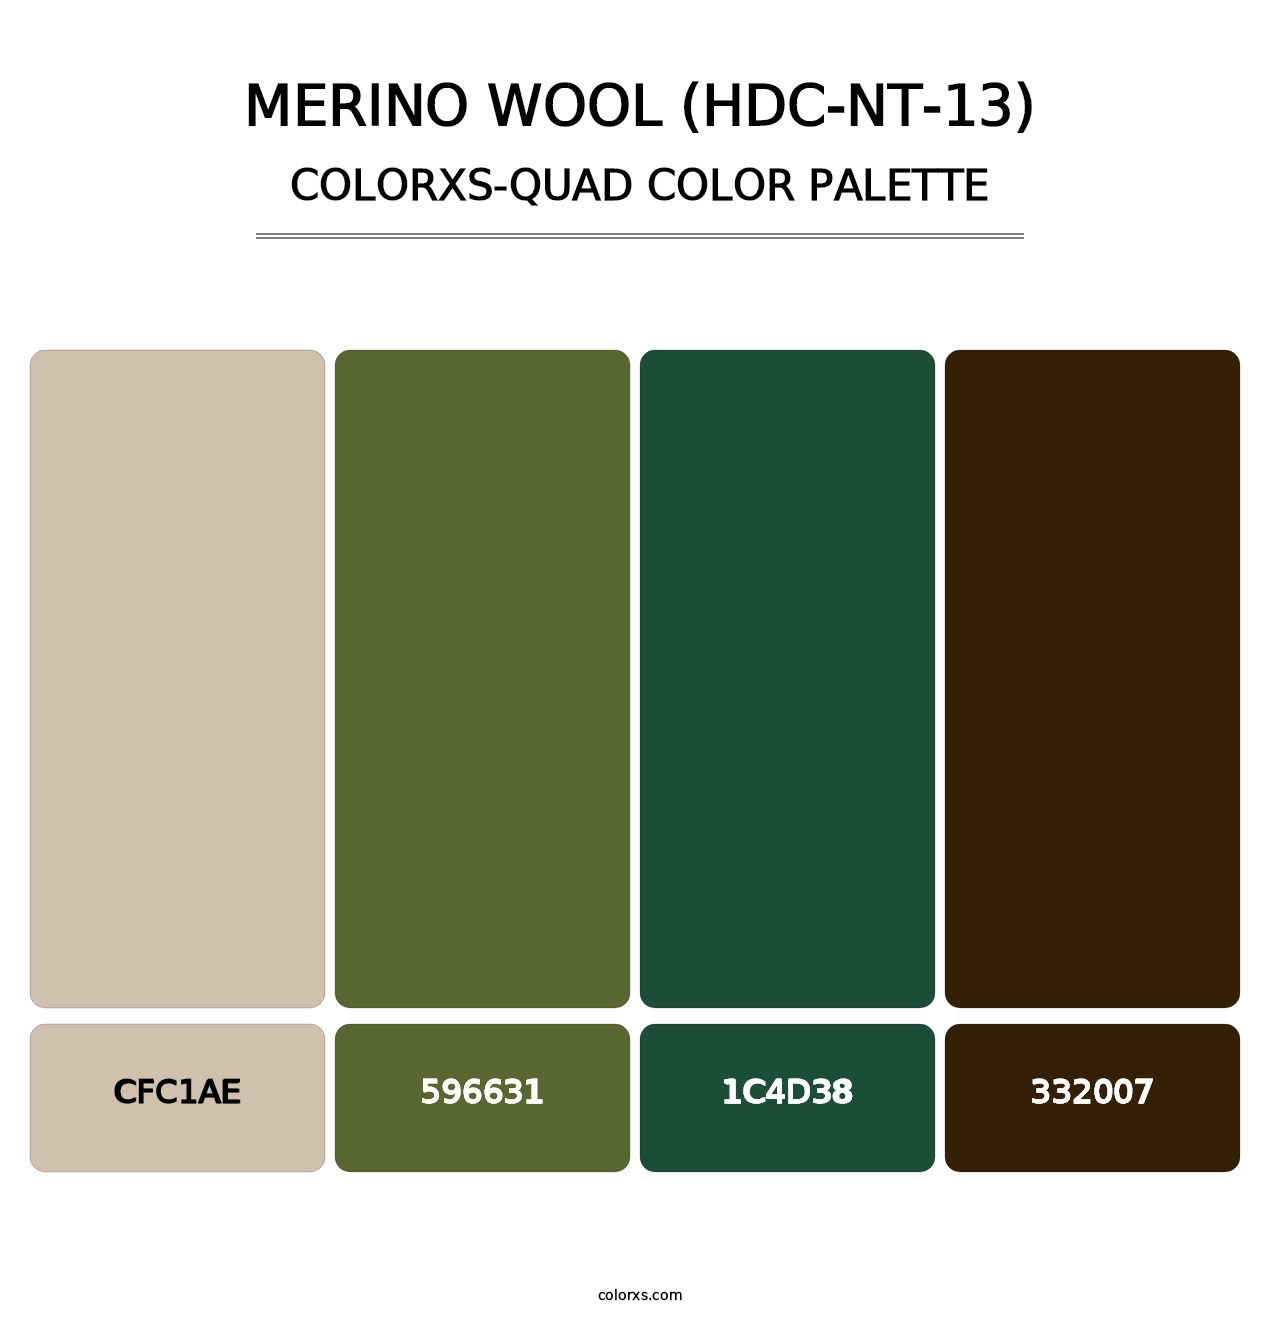 Merino Wool (HDC-NT-13) - Colorxs Quad Palette